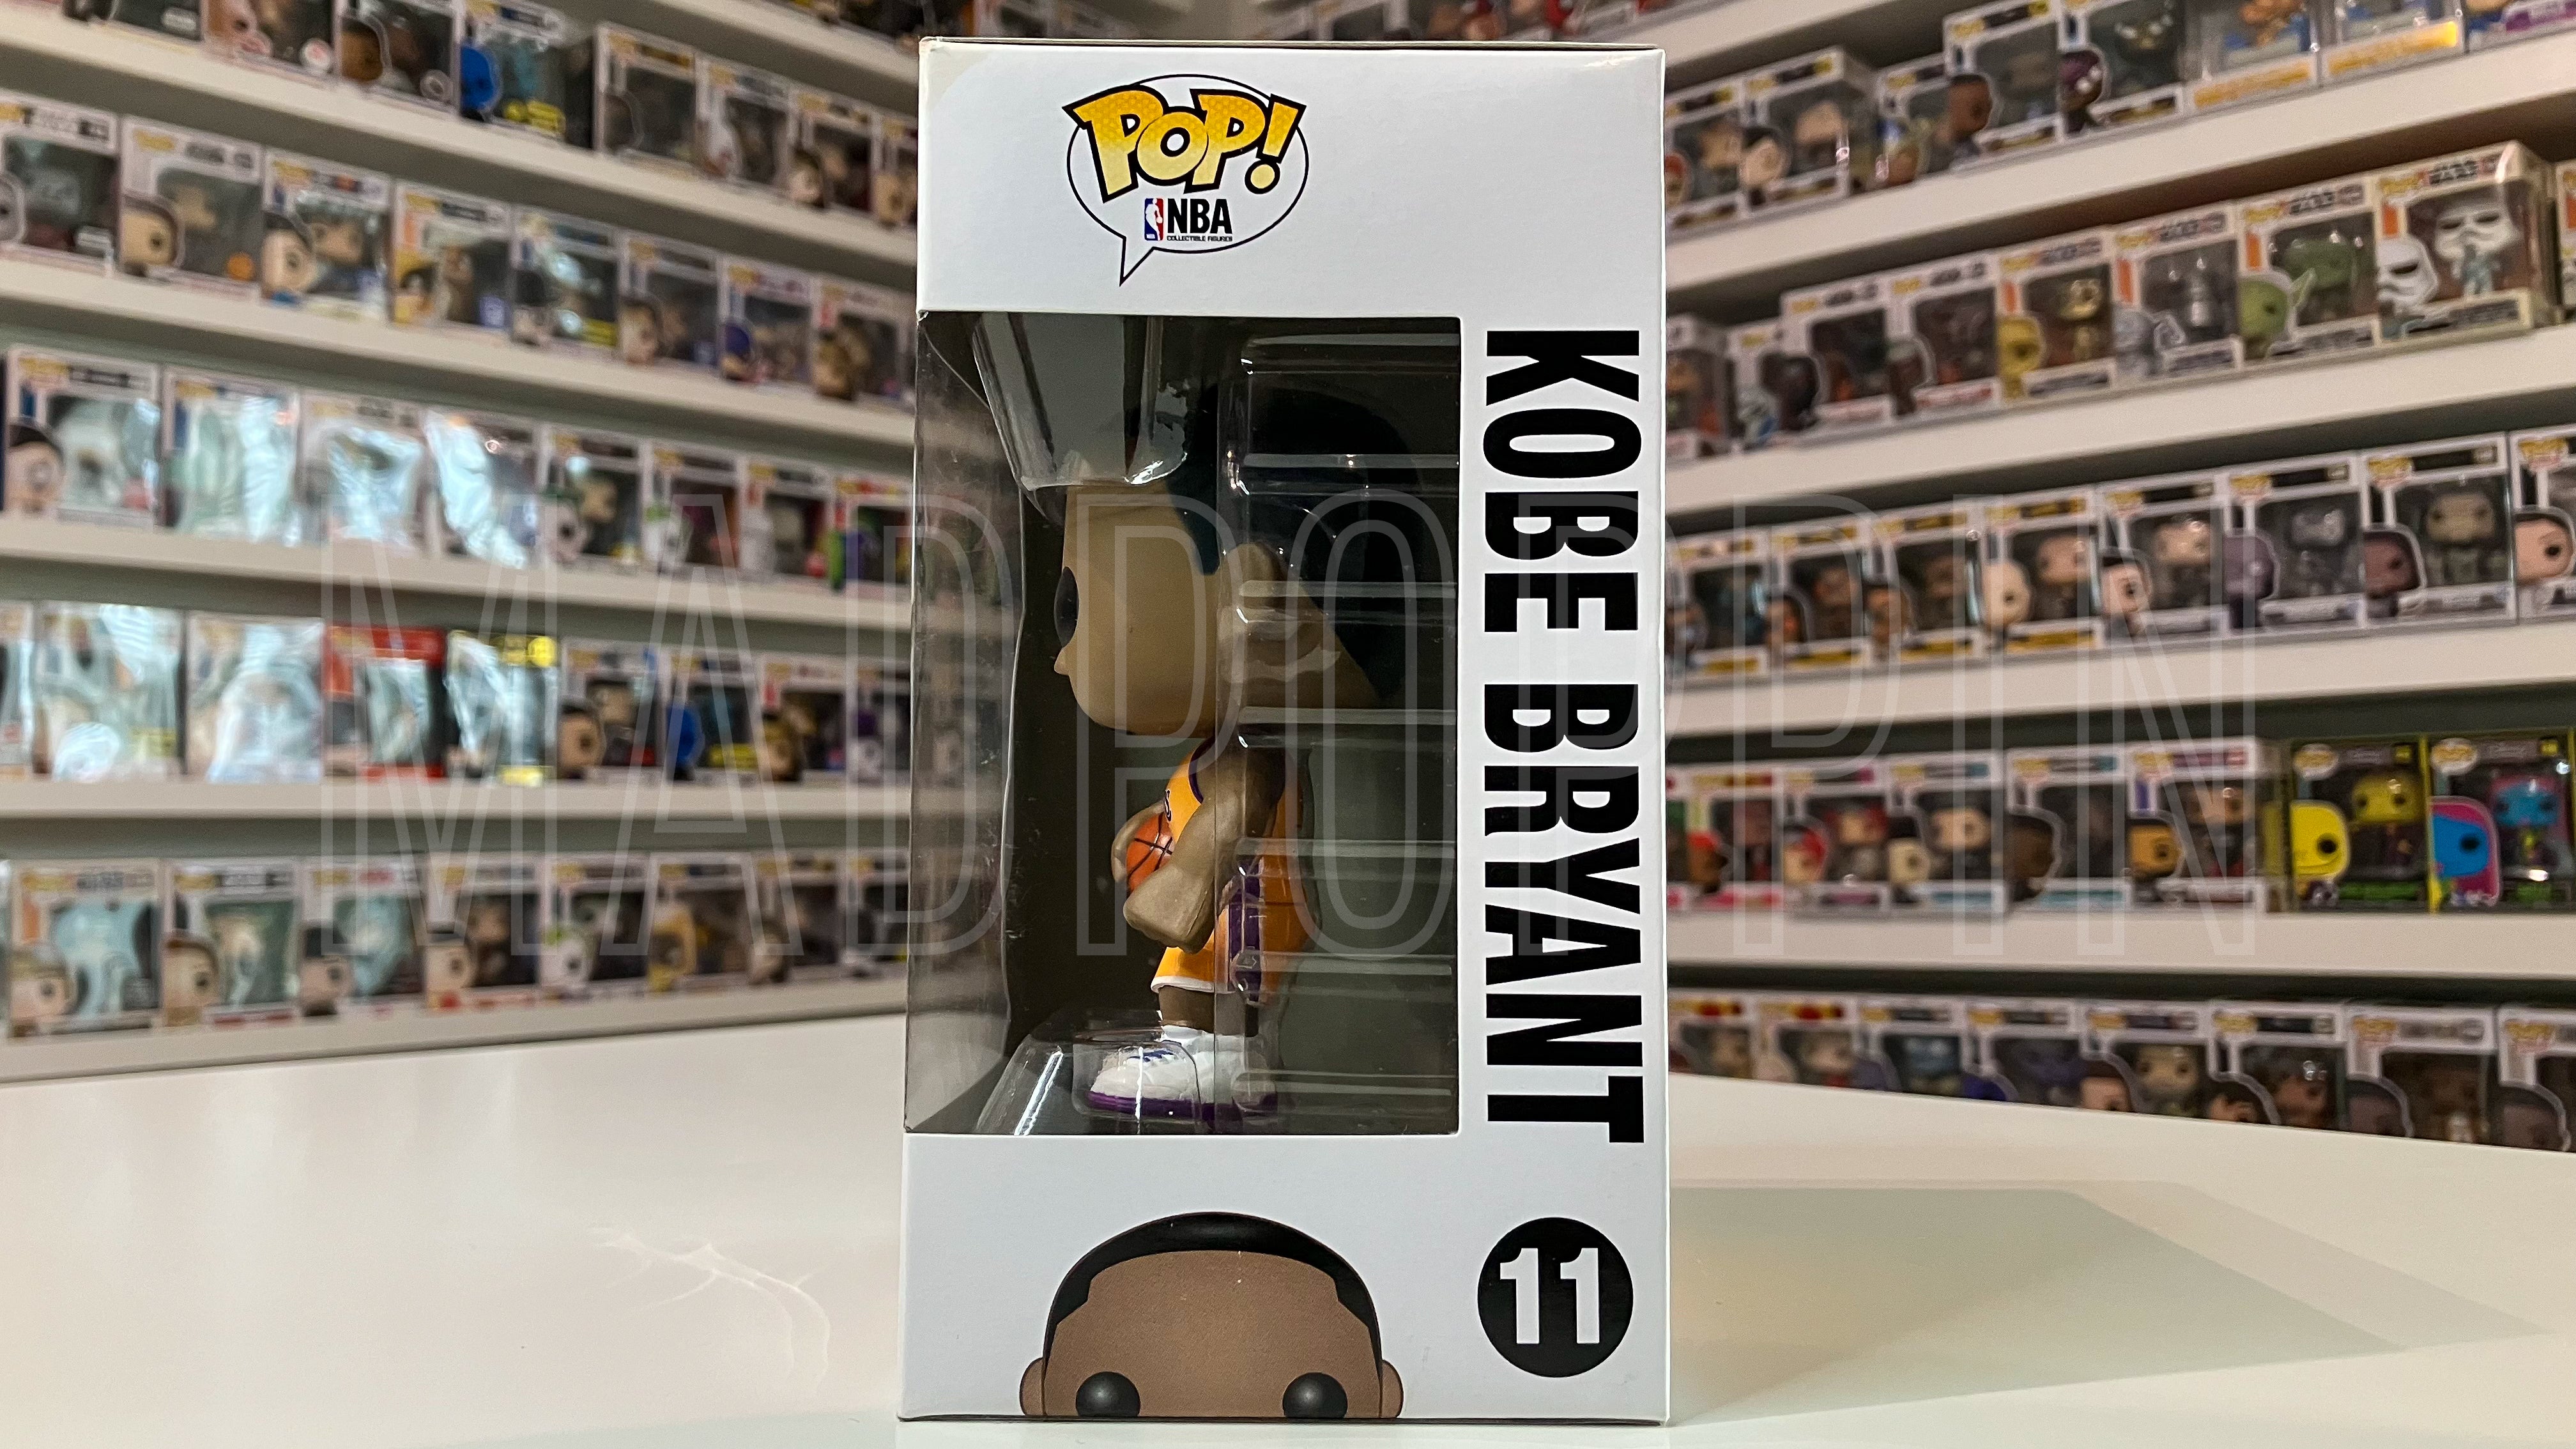 Funko Pop NBA Los Angeles Lakers Kobe Bryant w/o Armband Gold Jersey #24 Box 11